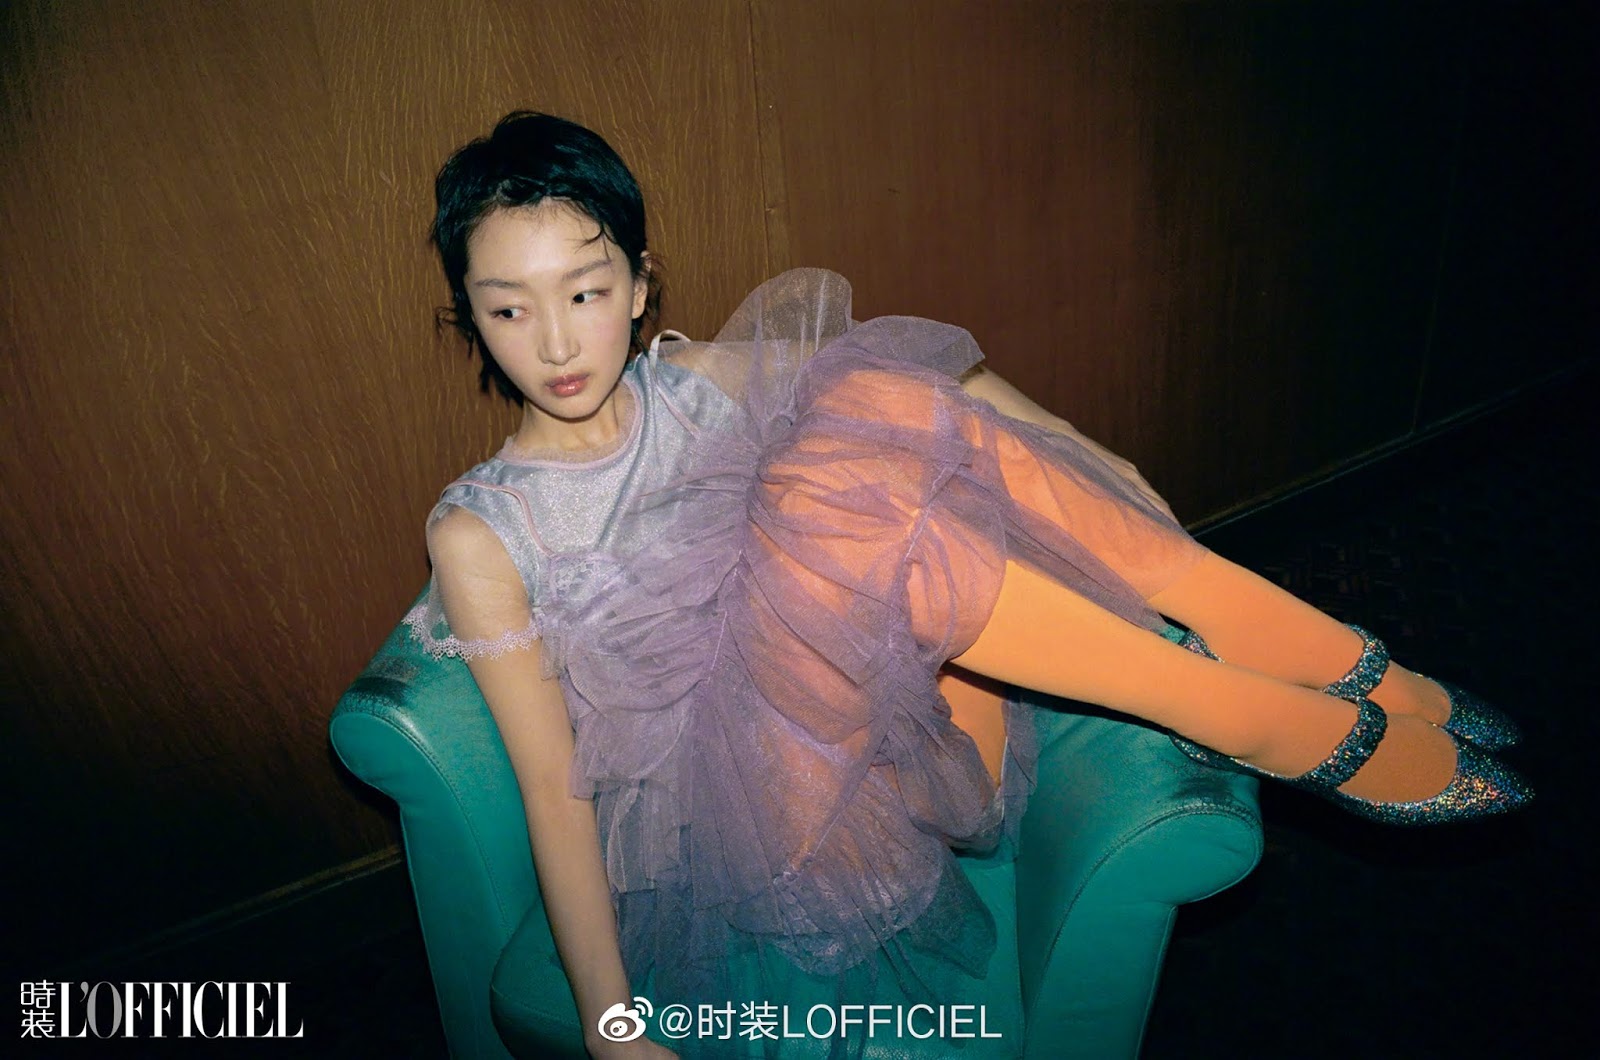 Actress Zhou Dongyu poses for the fashion magazine 